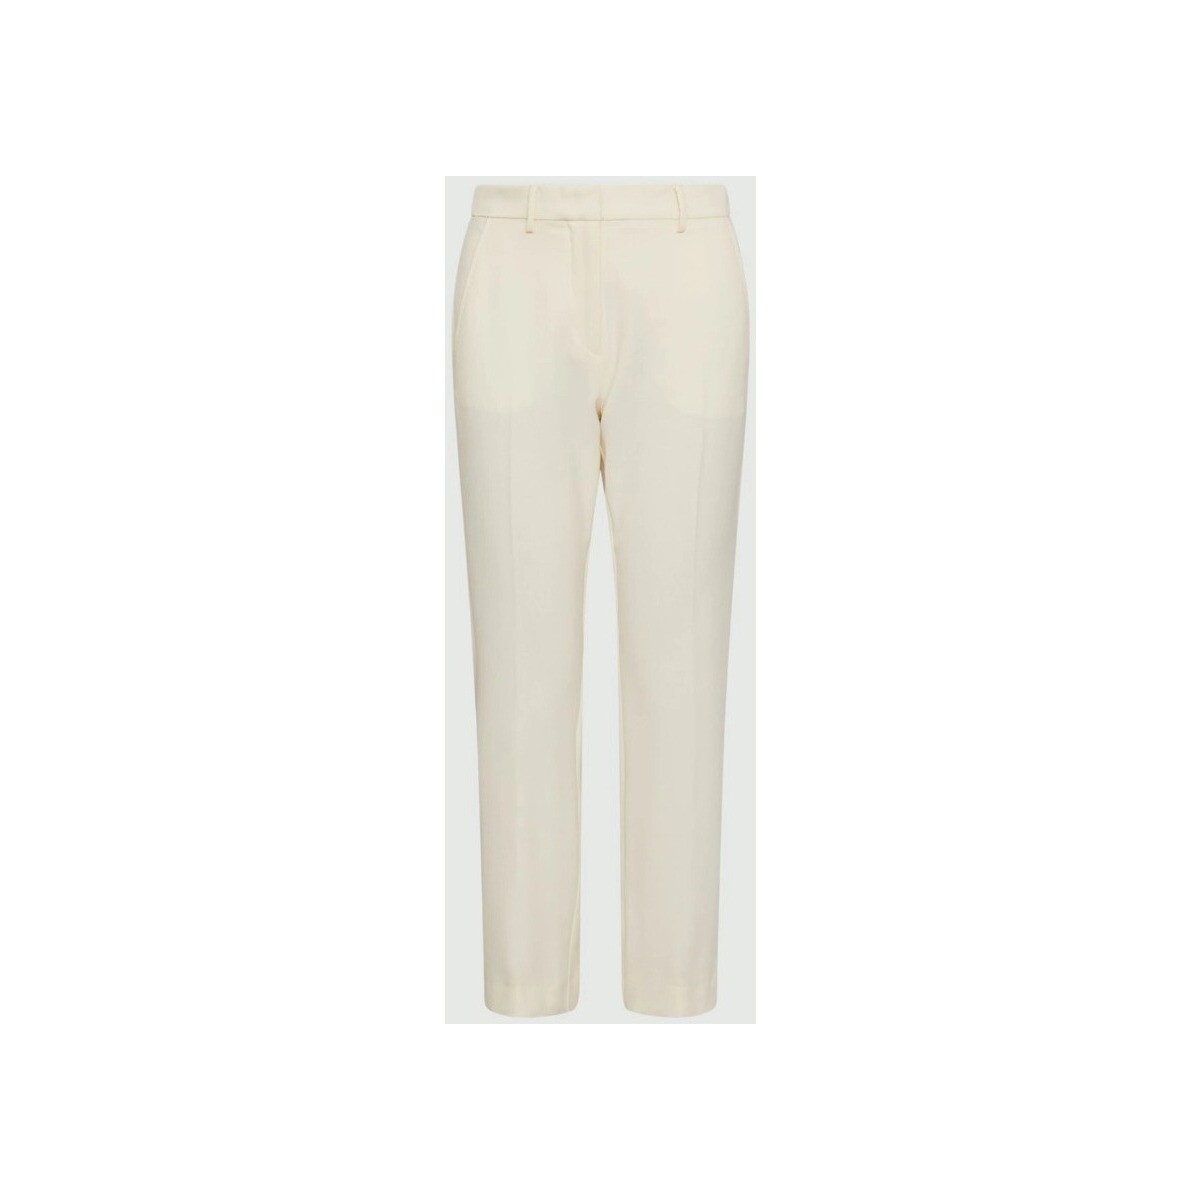 textil Mujer Pantalones Marella 23313123 Blanco